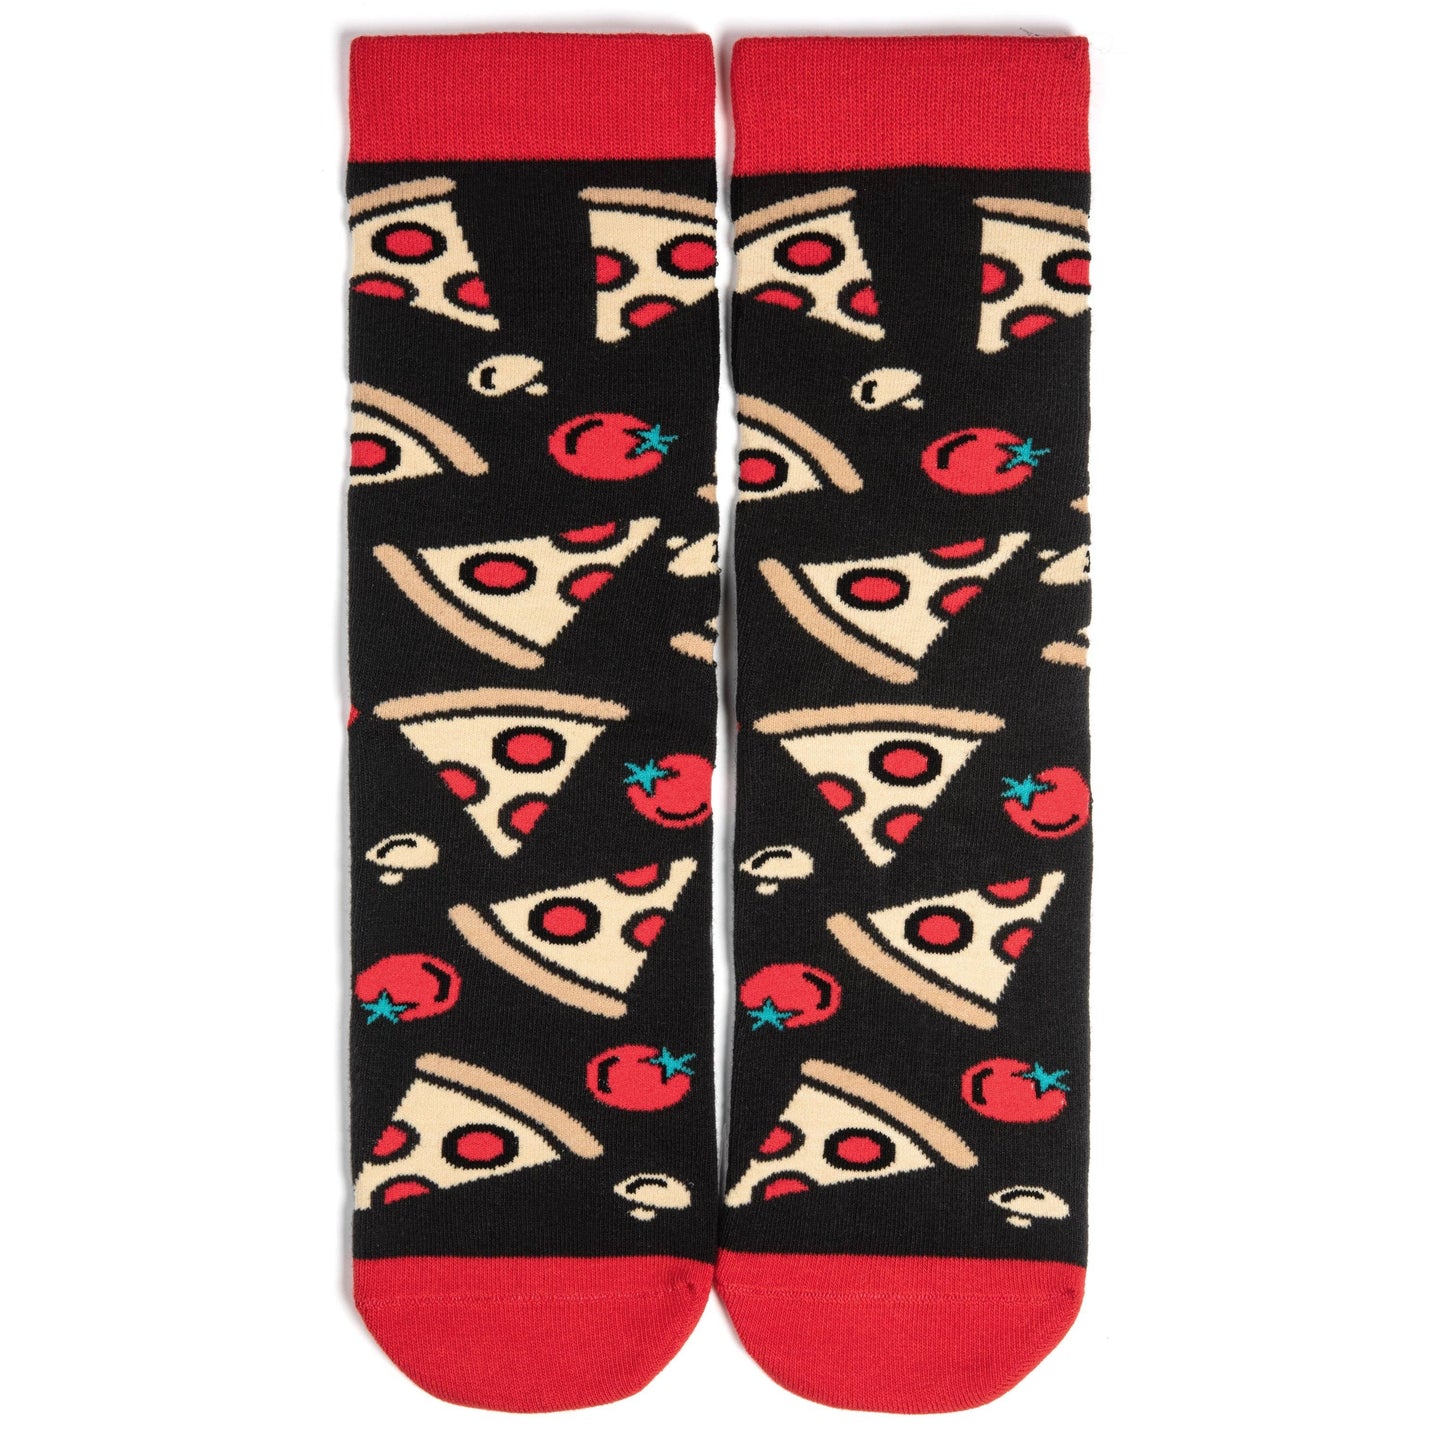 Lavley - Bring Me Some Pizza Socks